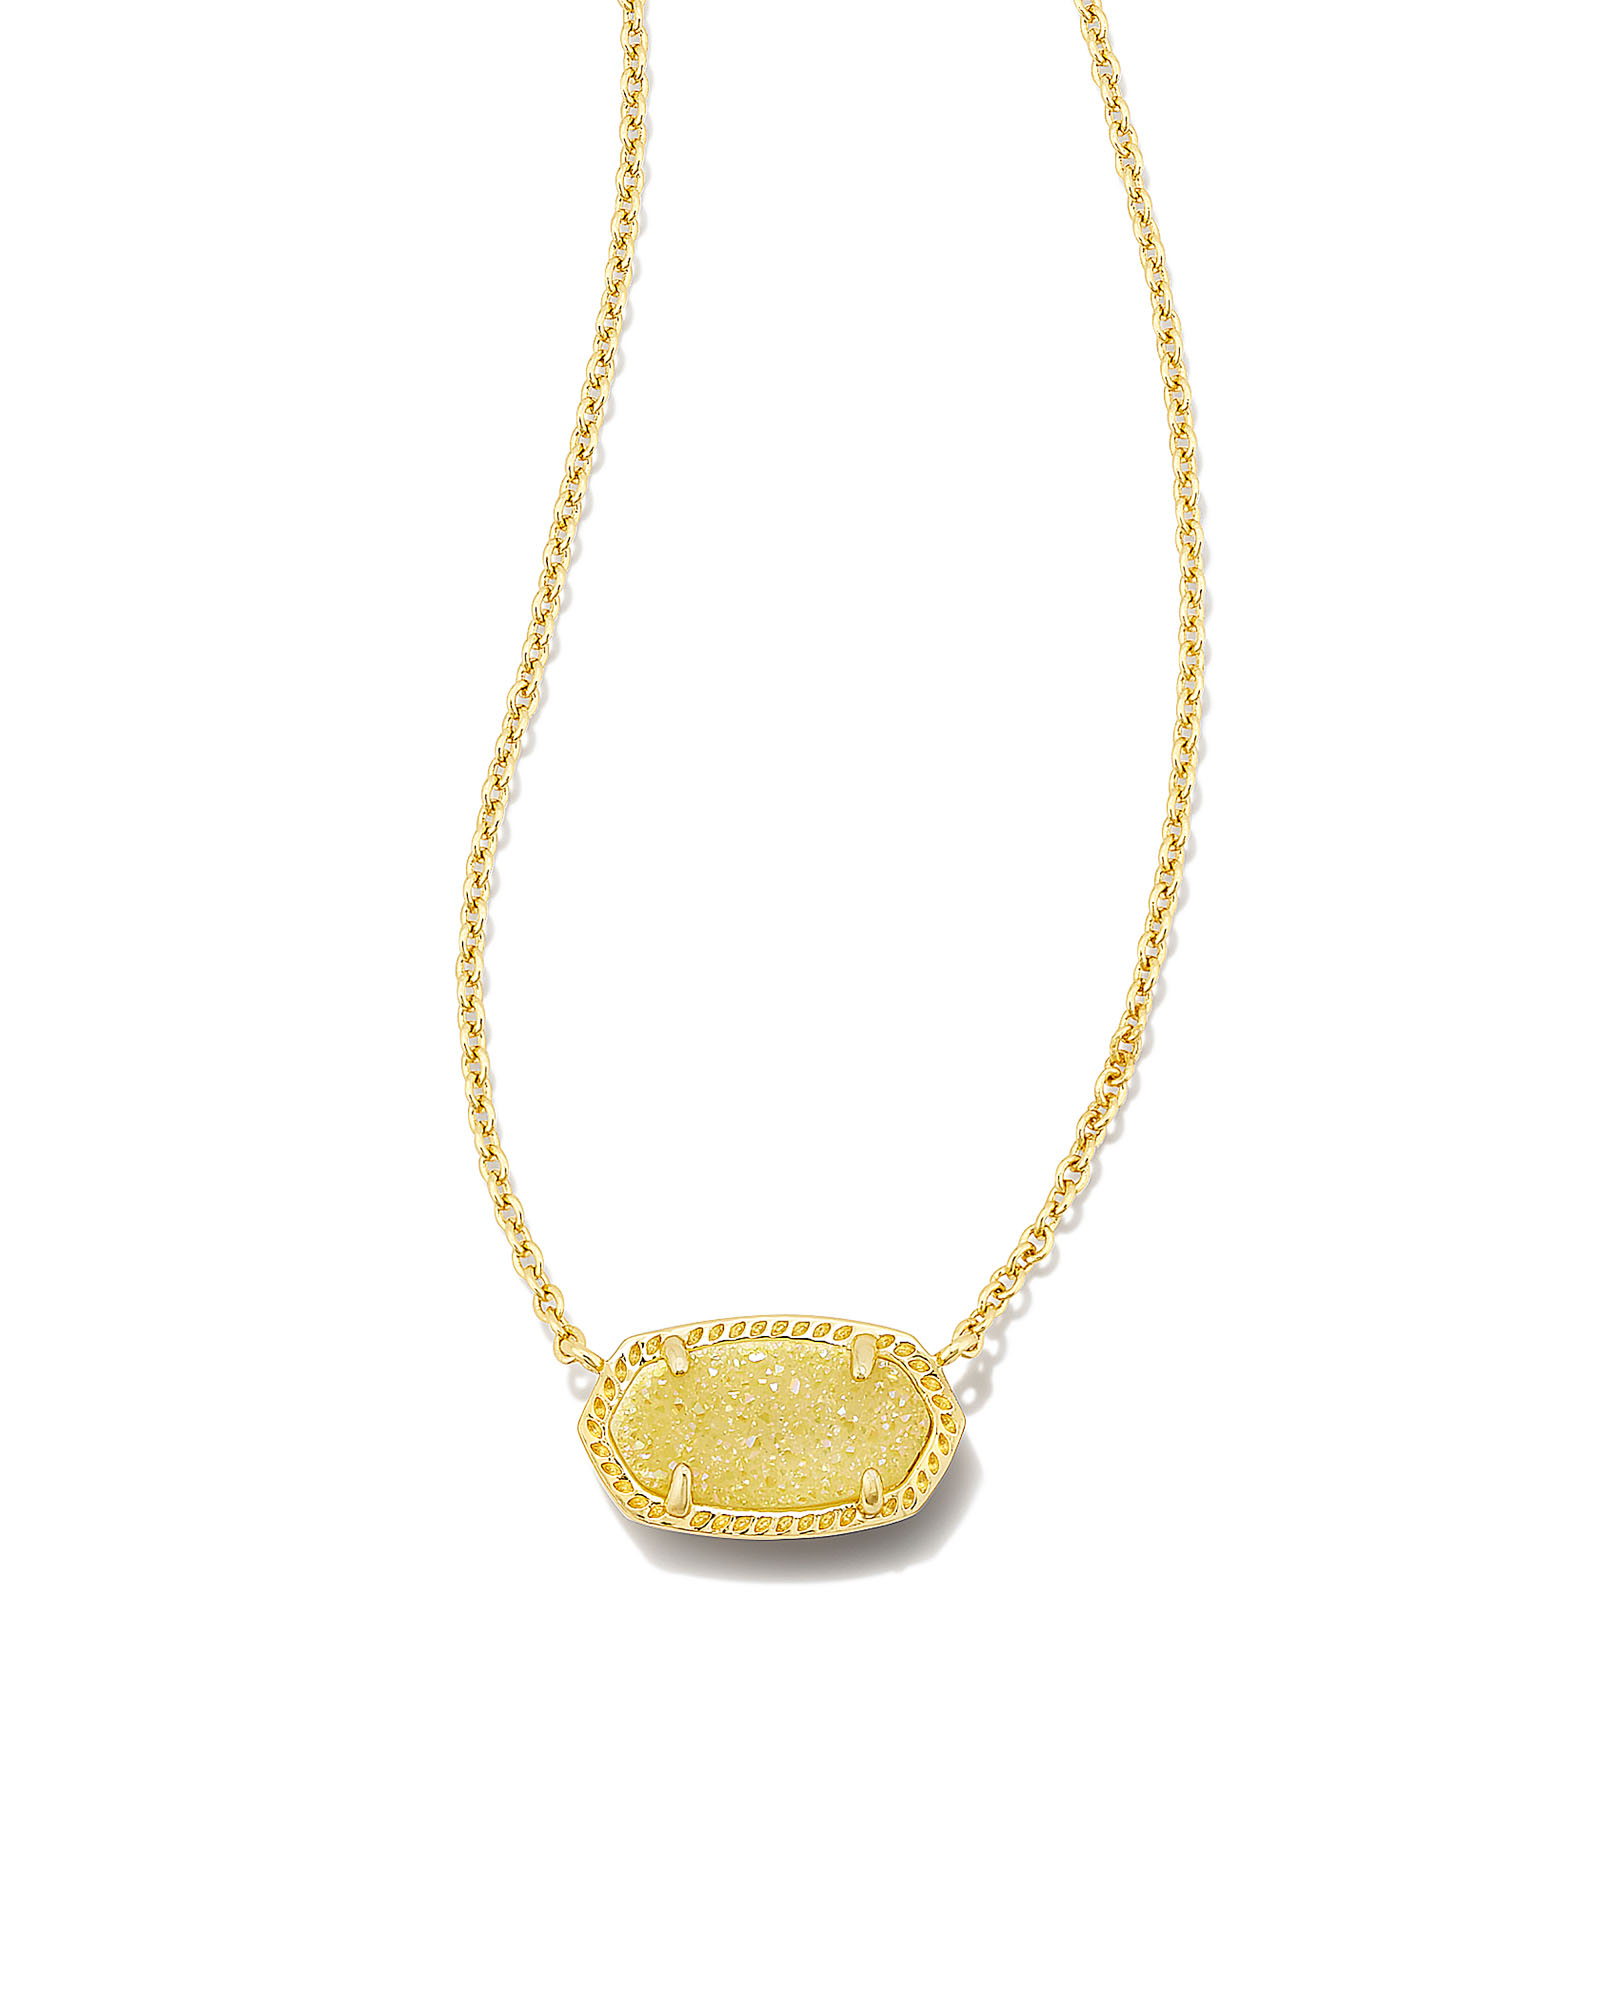 Kendra Scott Elisa Pendant Necklace in Pave Diamond and 14k Yellow Gold |  Bridge Street Town Centre